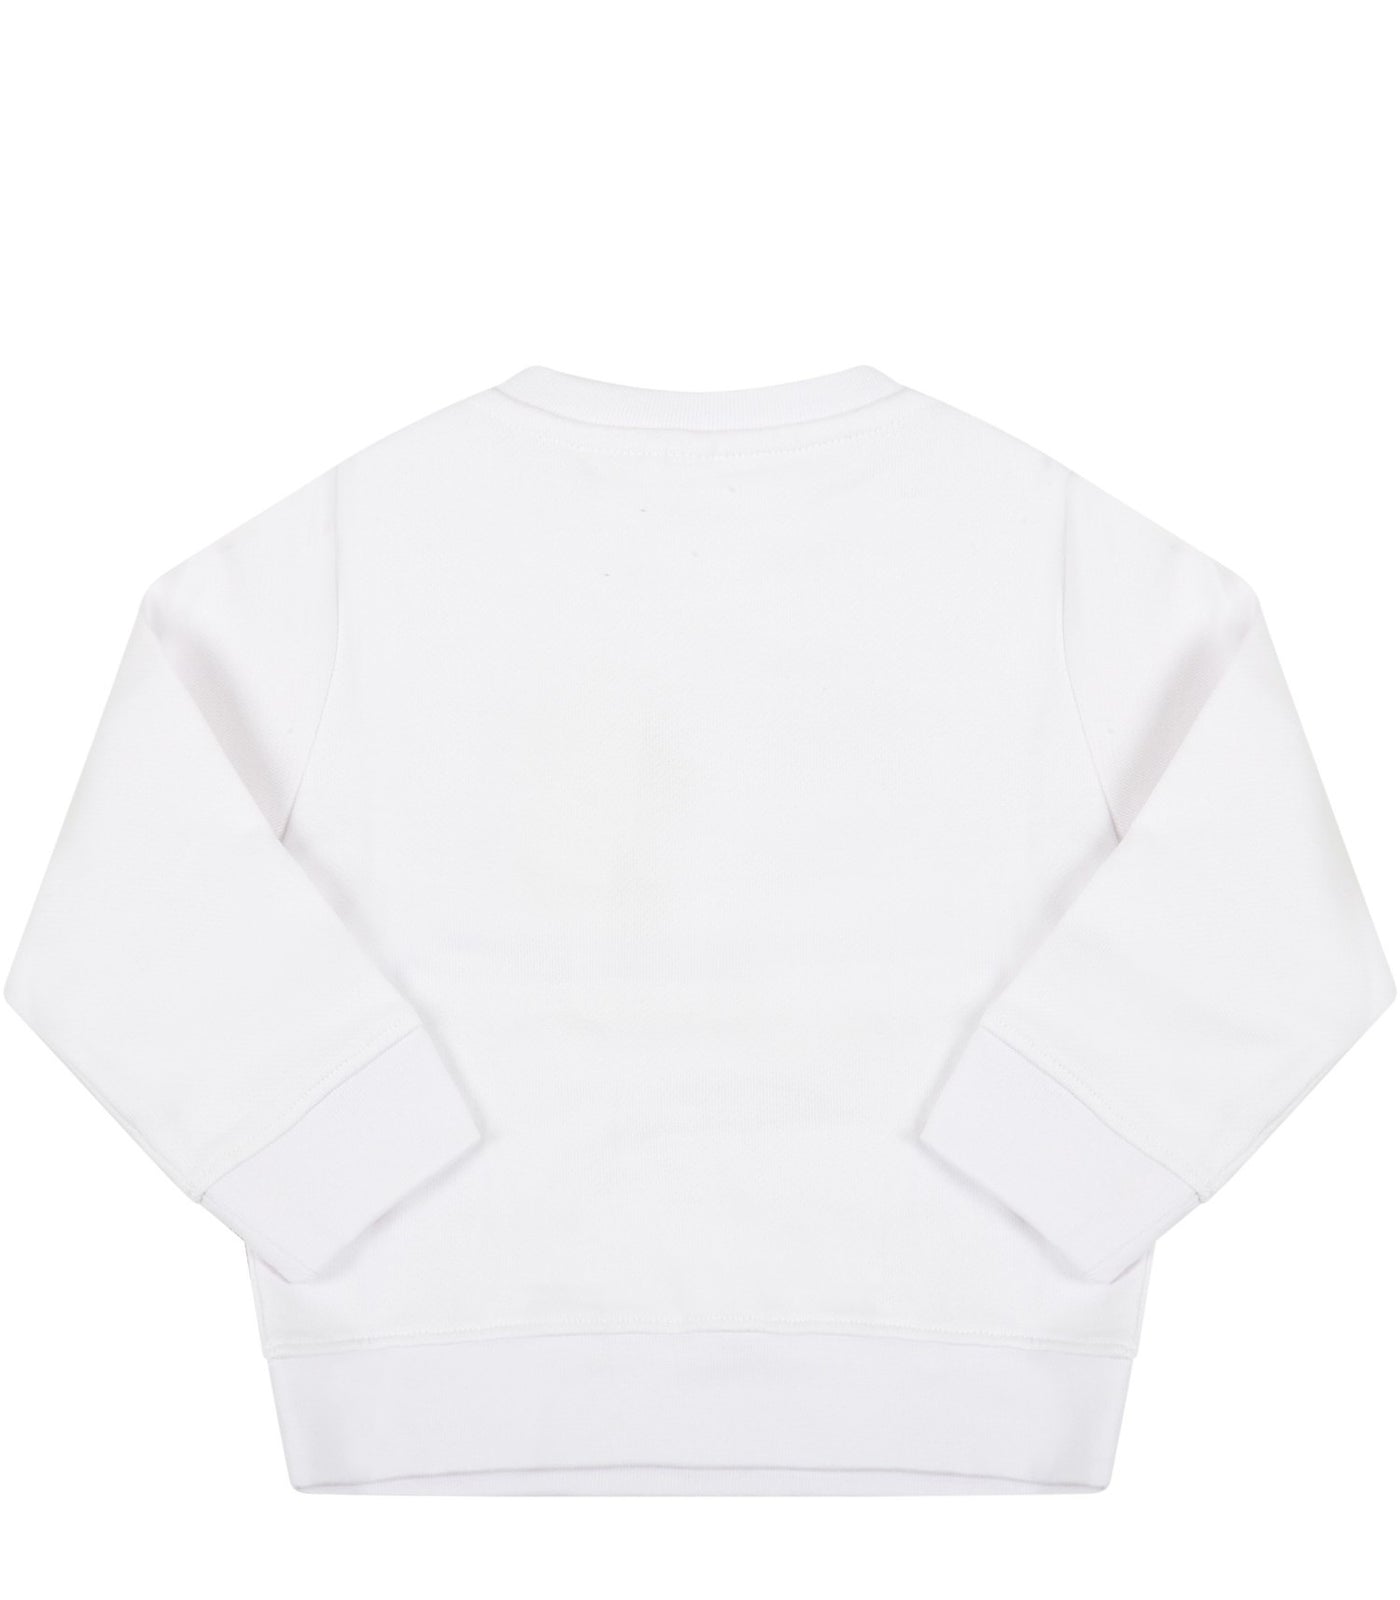 Stella McCartney Kids - White sweatshirt for baby boy with snowman